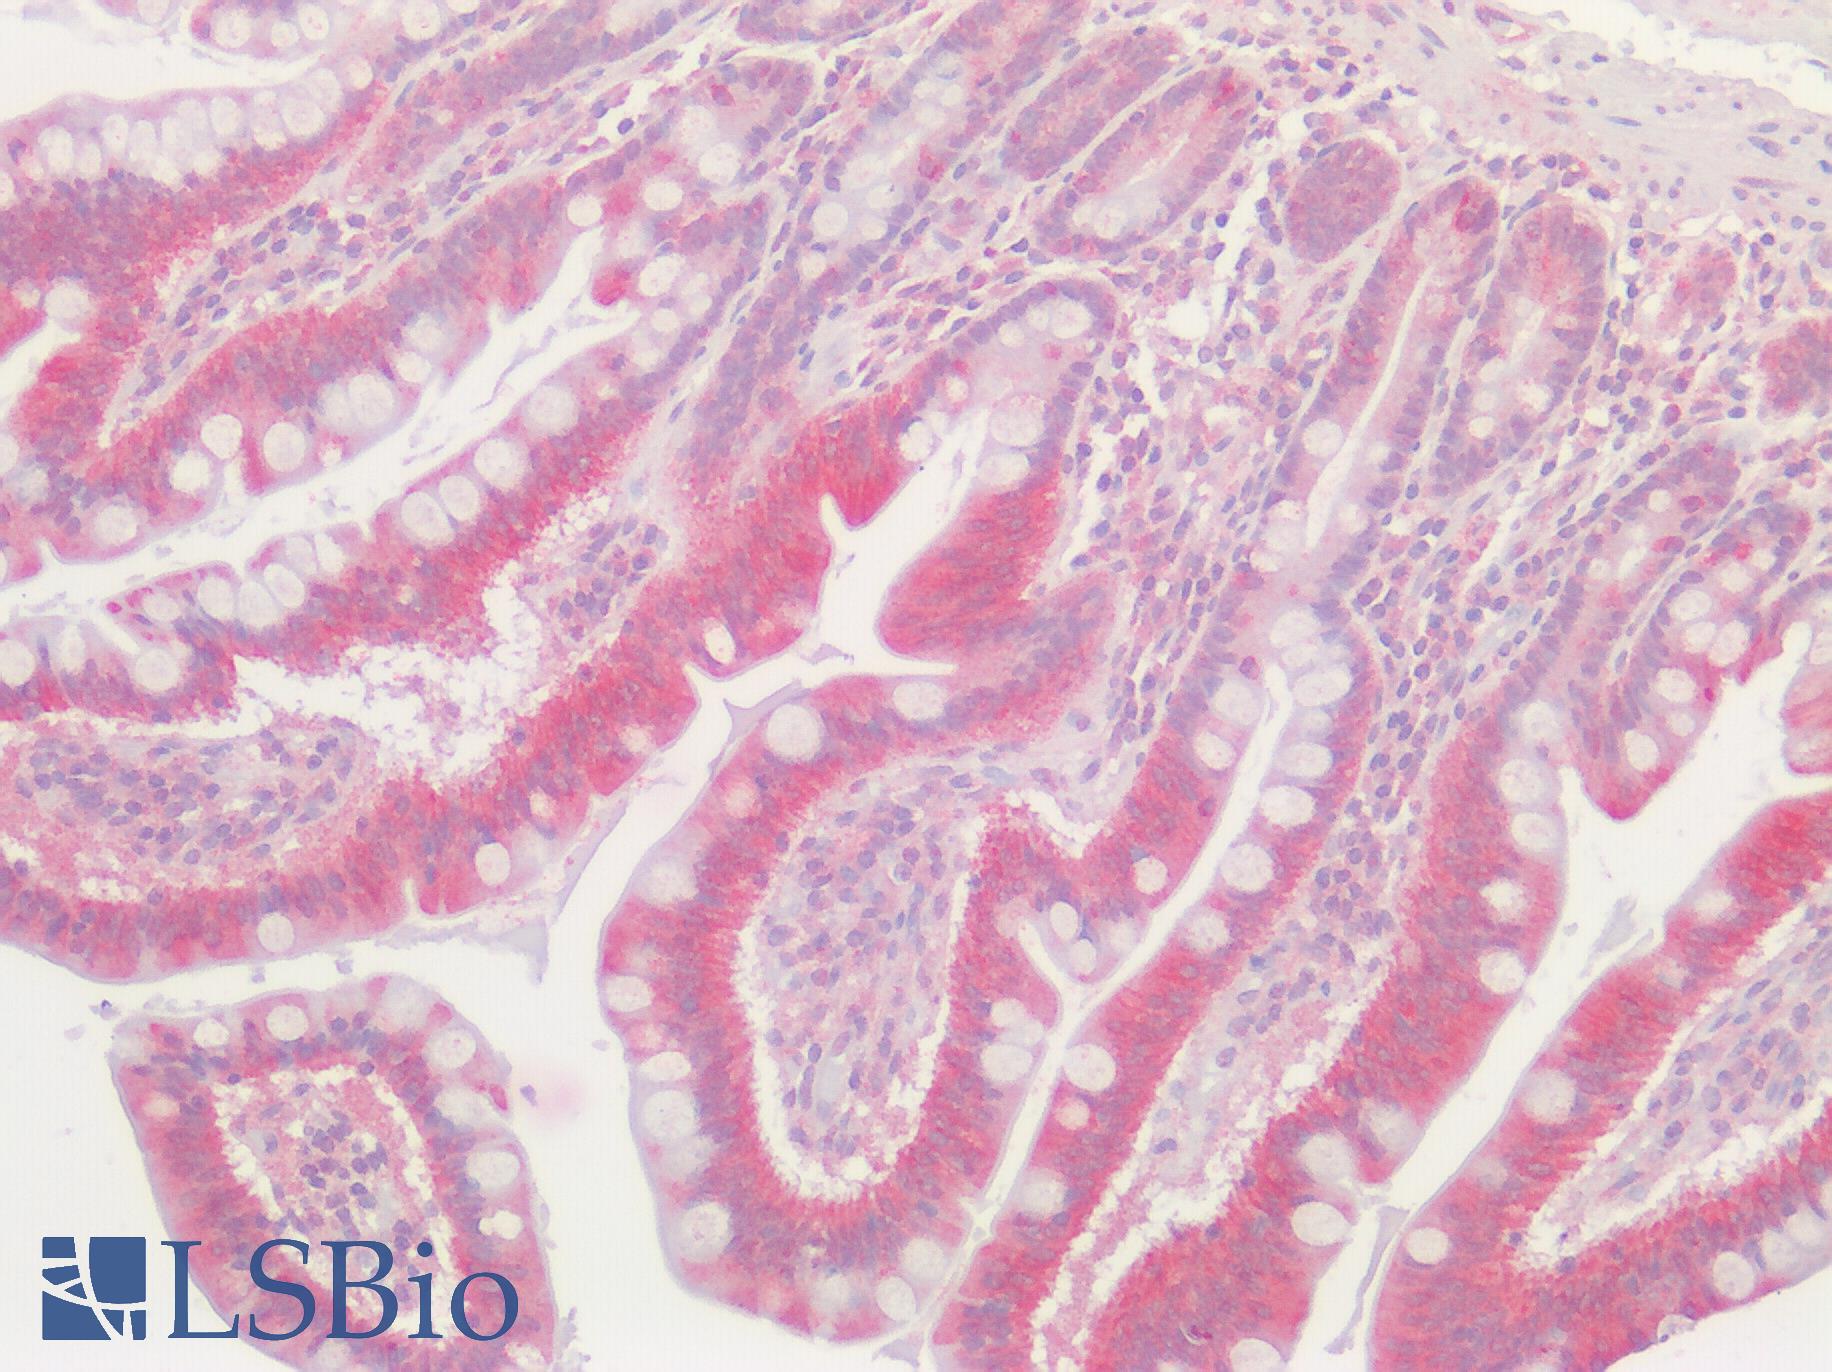 GPRC5D Antibody - Human Small Intestine: Formalin-Fixed, Paraffin-Embedded (FFPE)